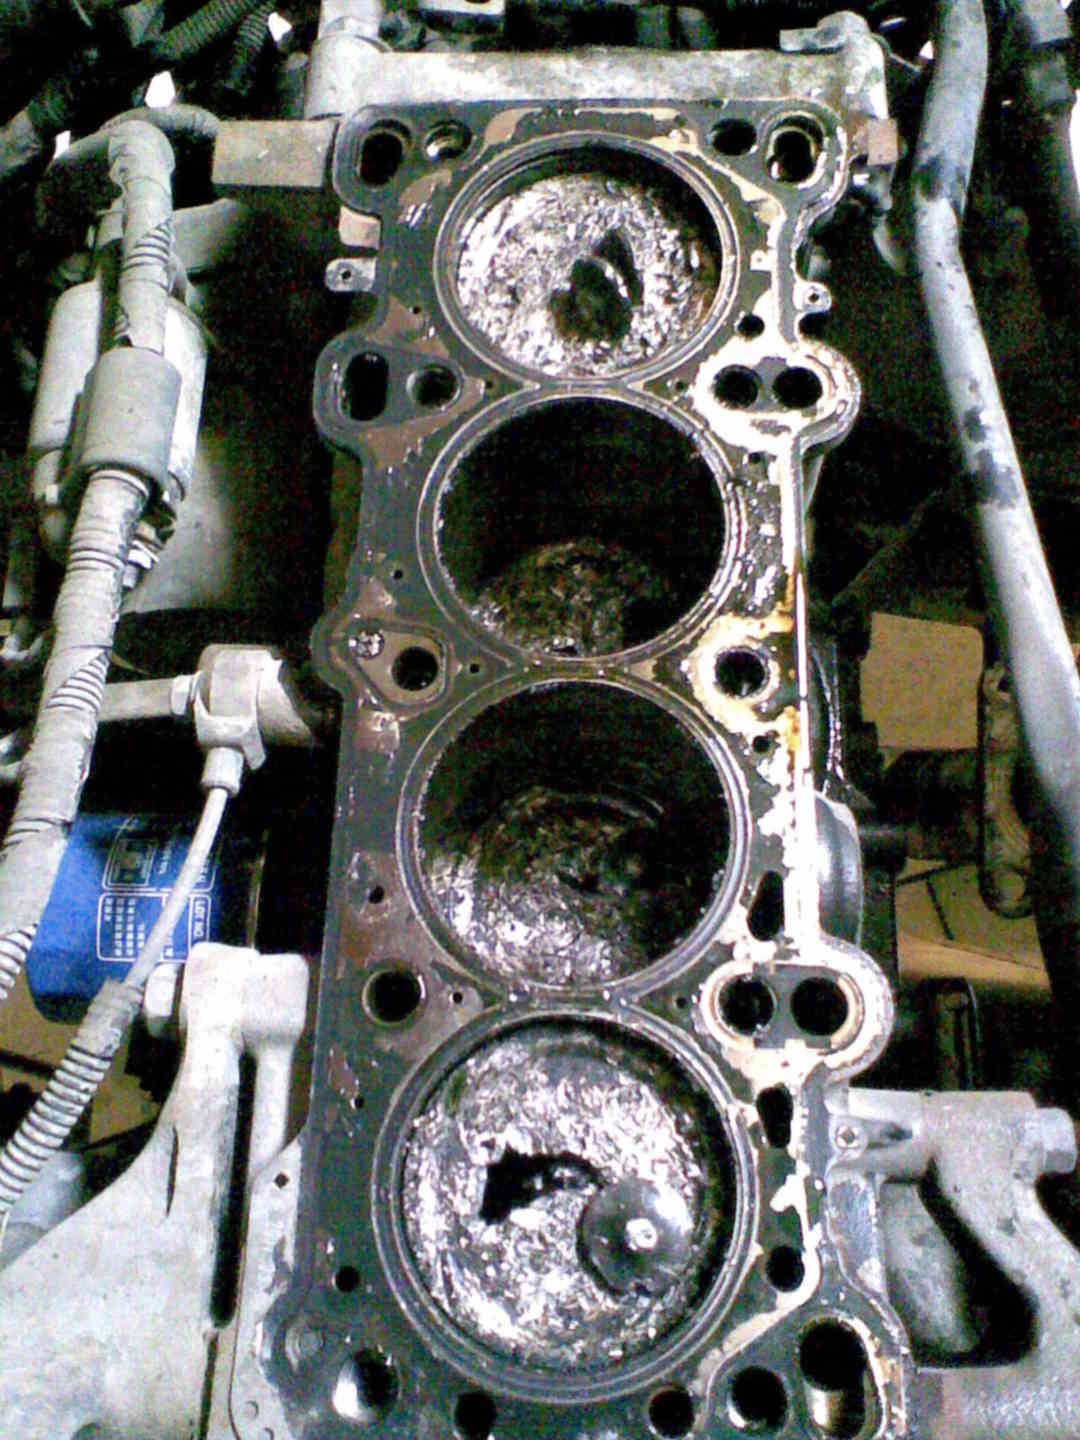 Двигатель рено гнет клапана. Дастер 2.0 загнуло клапана. Загнет клапана при обрыве ремня ГРМ Ока 11113. Поршень Hyundai Accent обрыв ремня. Рено Дастер 2л гнет клапана.